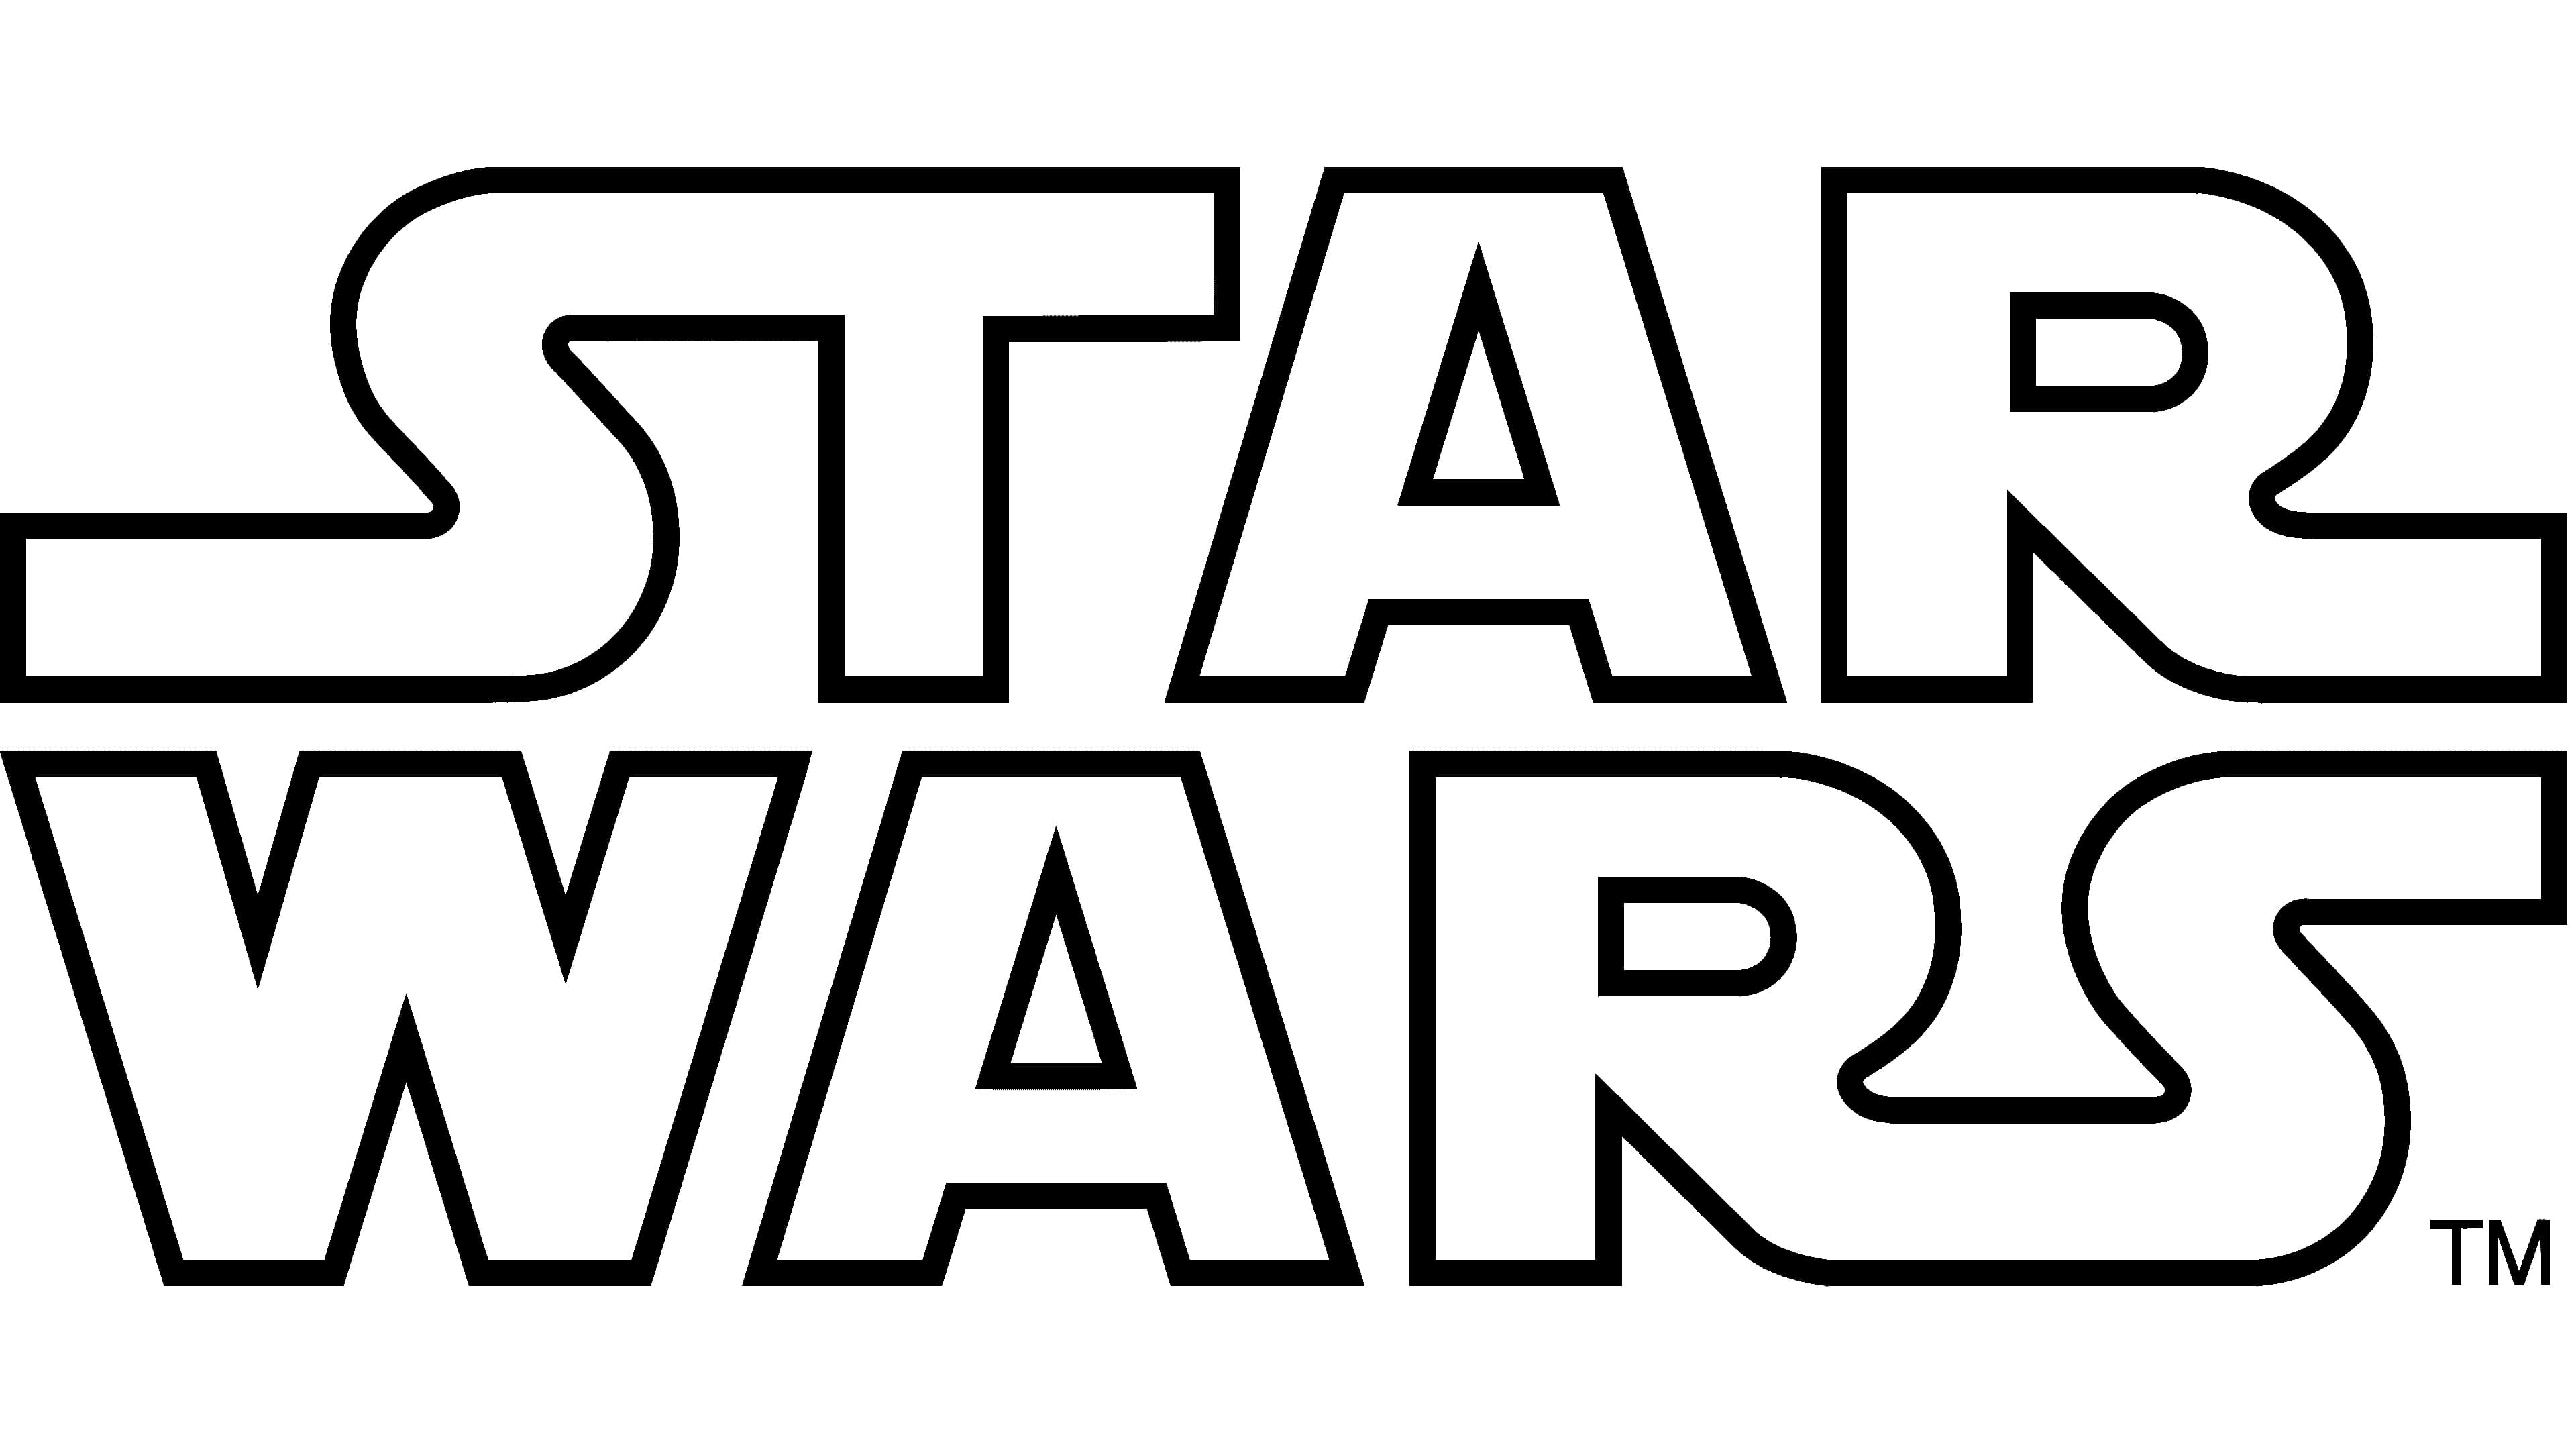 classic star wars logo